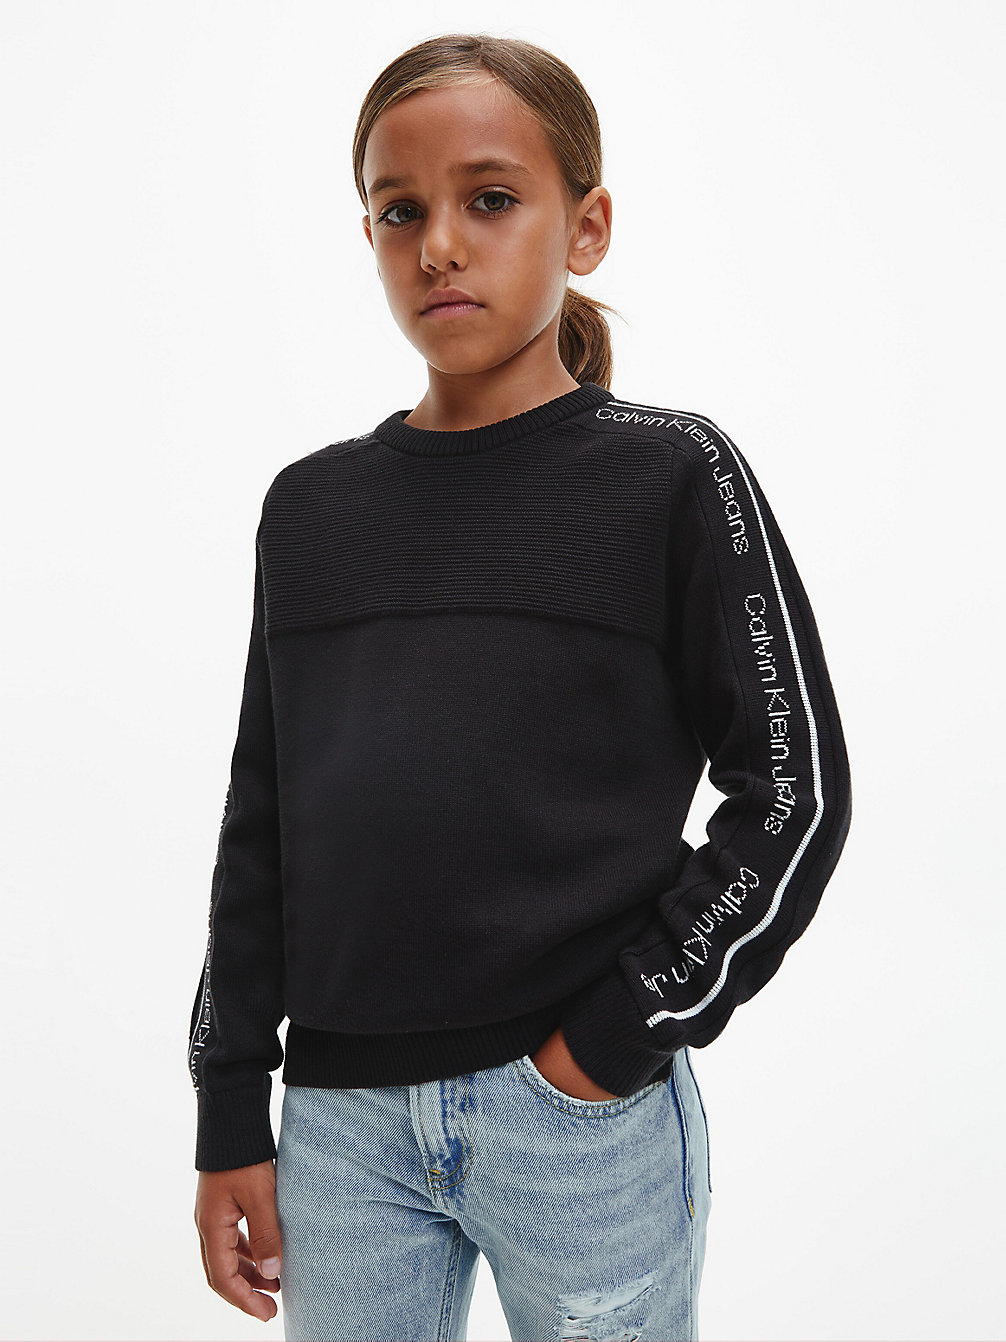 CK BLACK > Lässiger Logo-Pullover > undefined boys - Calvin Klein